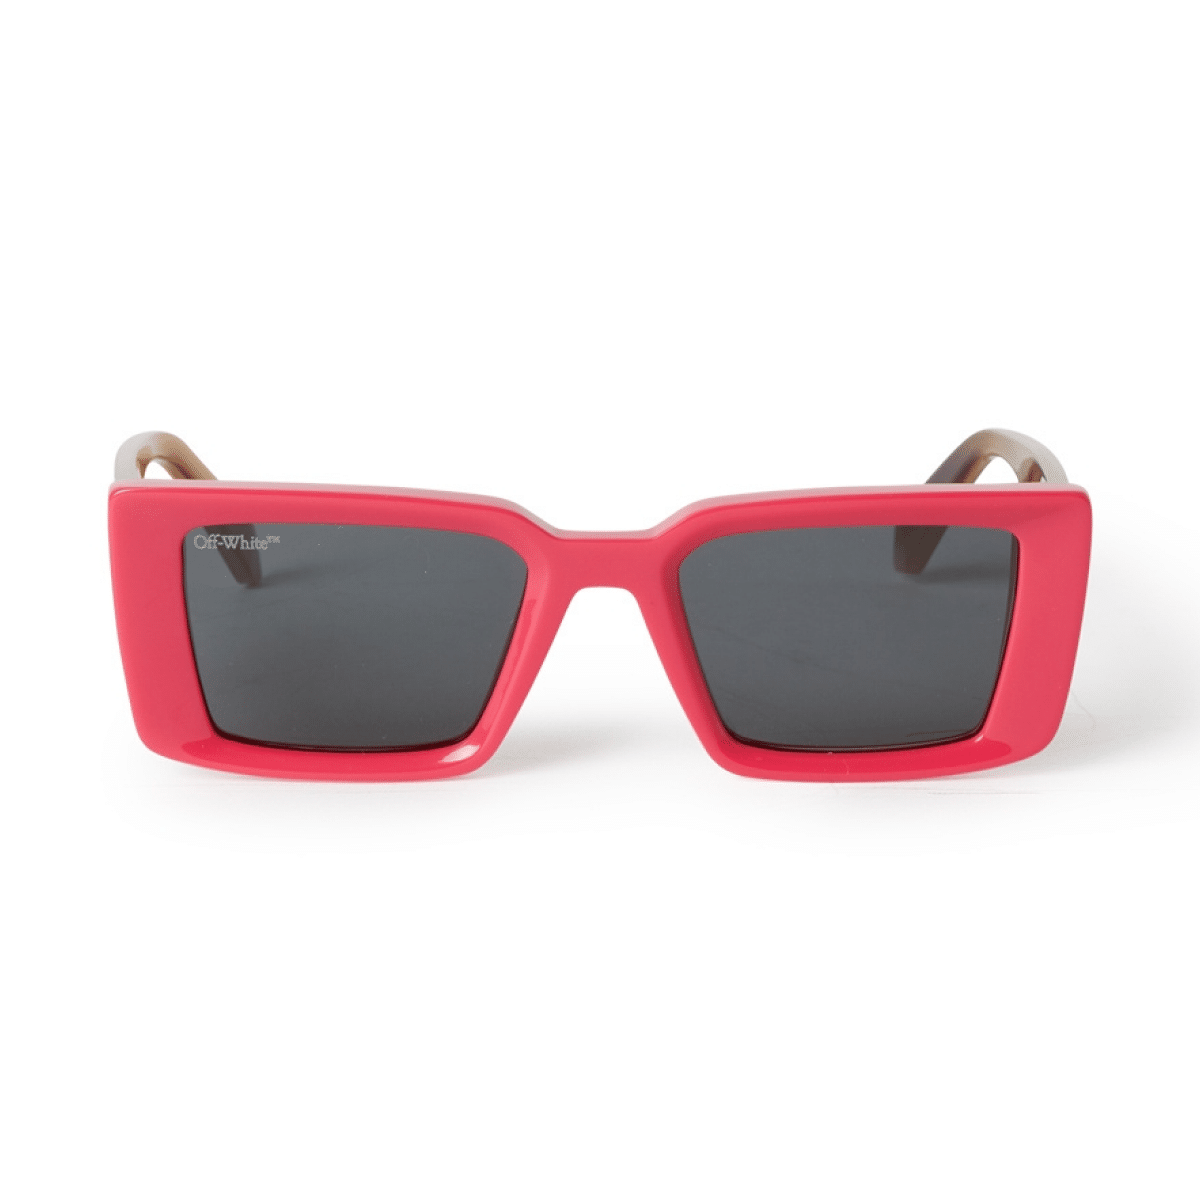 red millionaire sunglasses